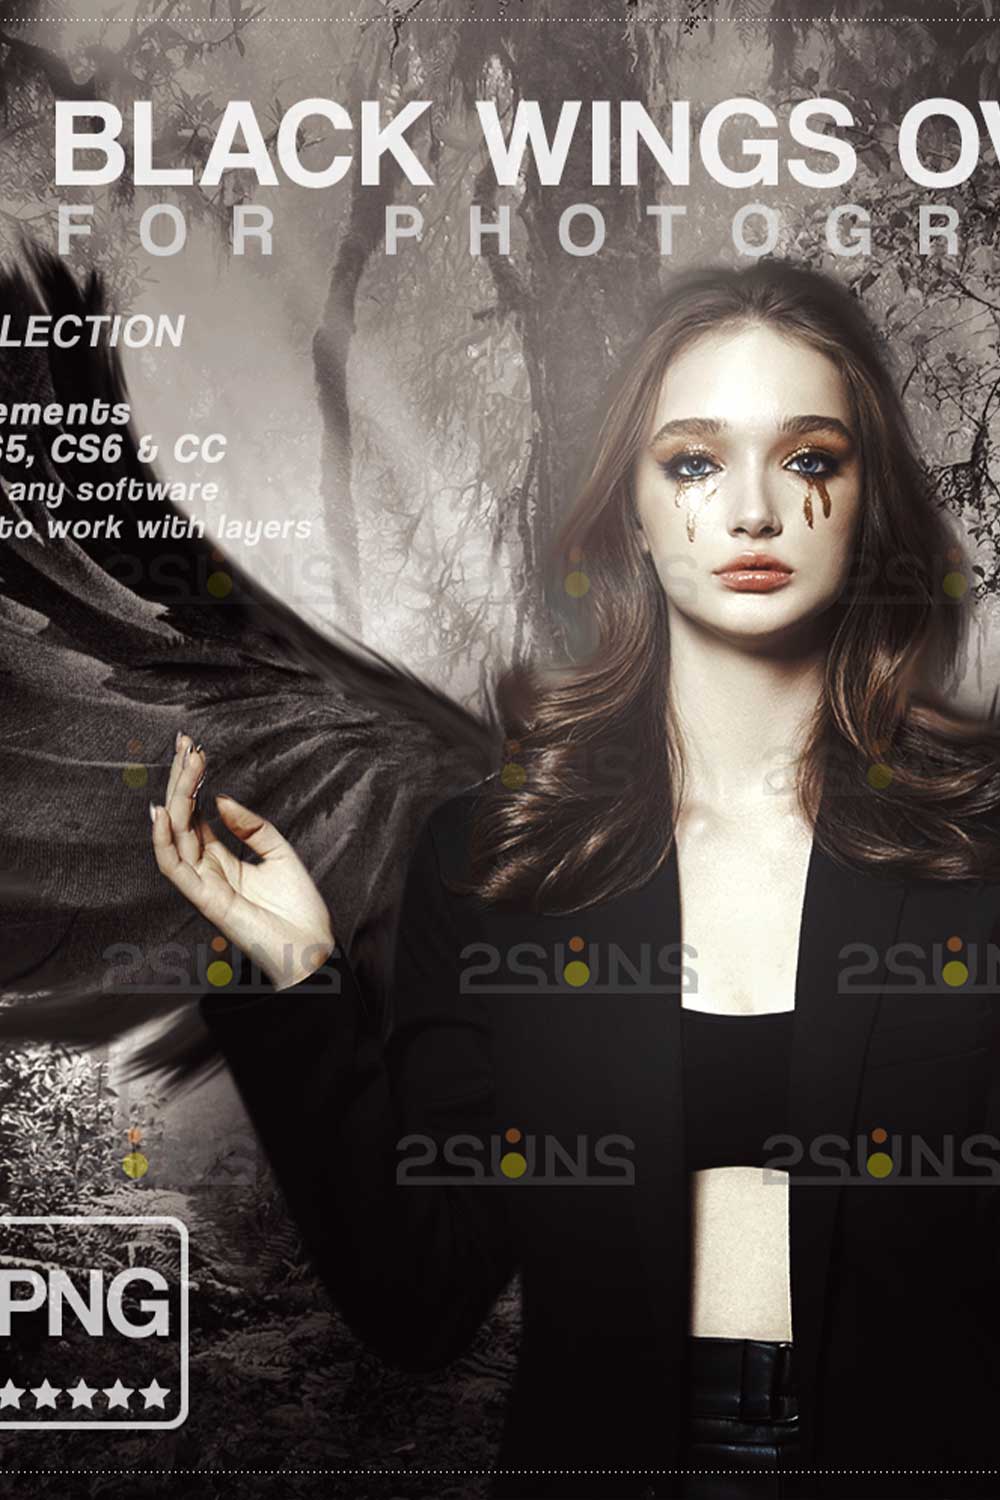 Realistic Black Angel Wings Photoshop Overlays pinterest image.